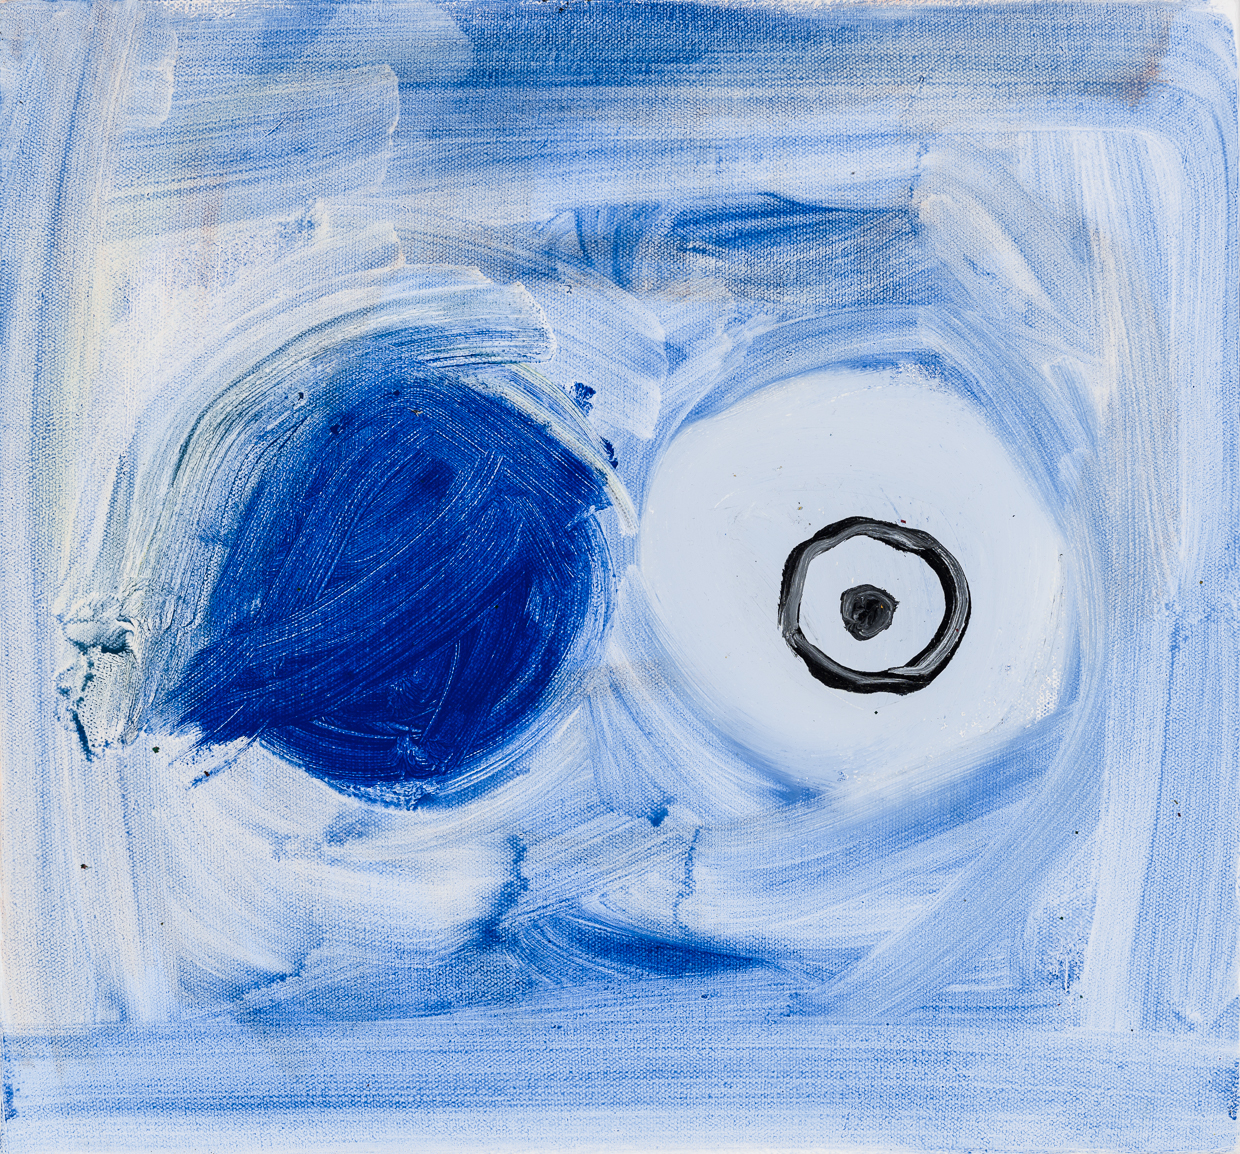  Blue Eyes, 2016. 14" x 15", oil on canvas.  